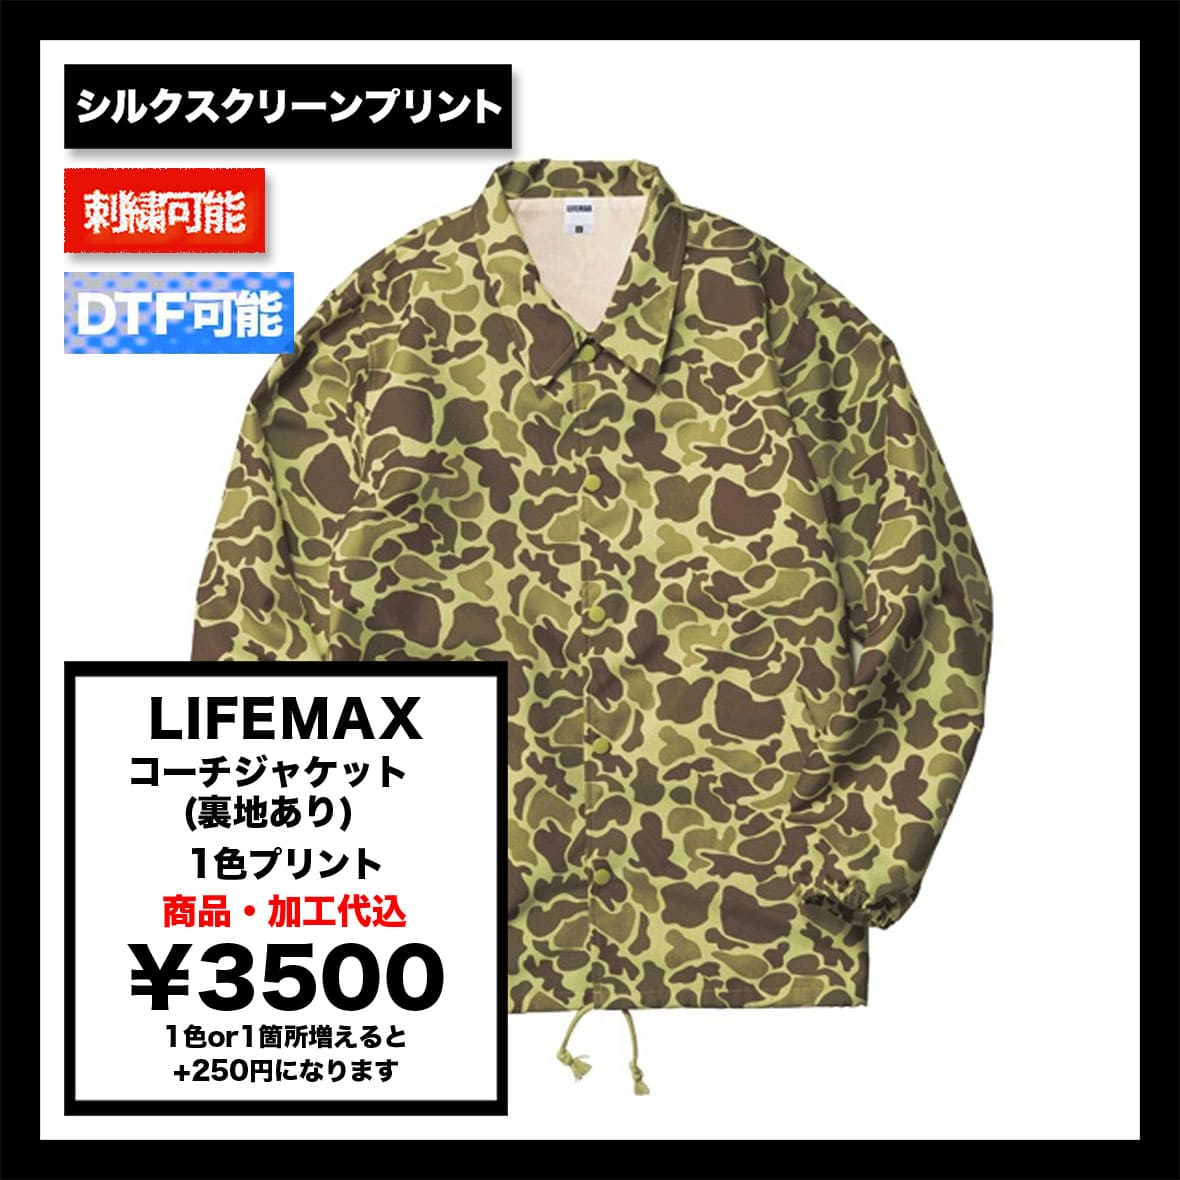 LIFEMAX ライフマックス コーチジャケット (裏地あり) (品番MJ0077)